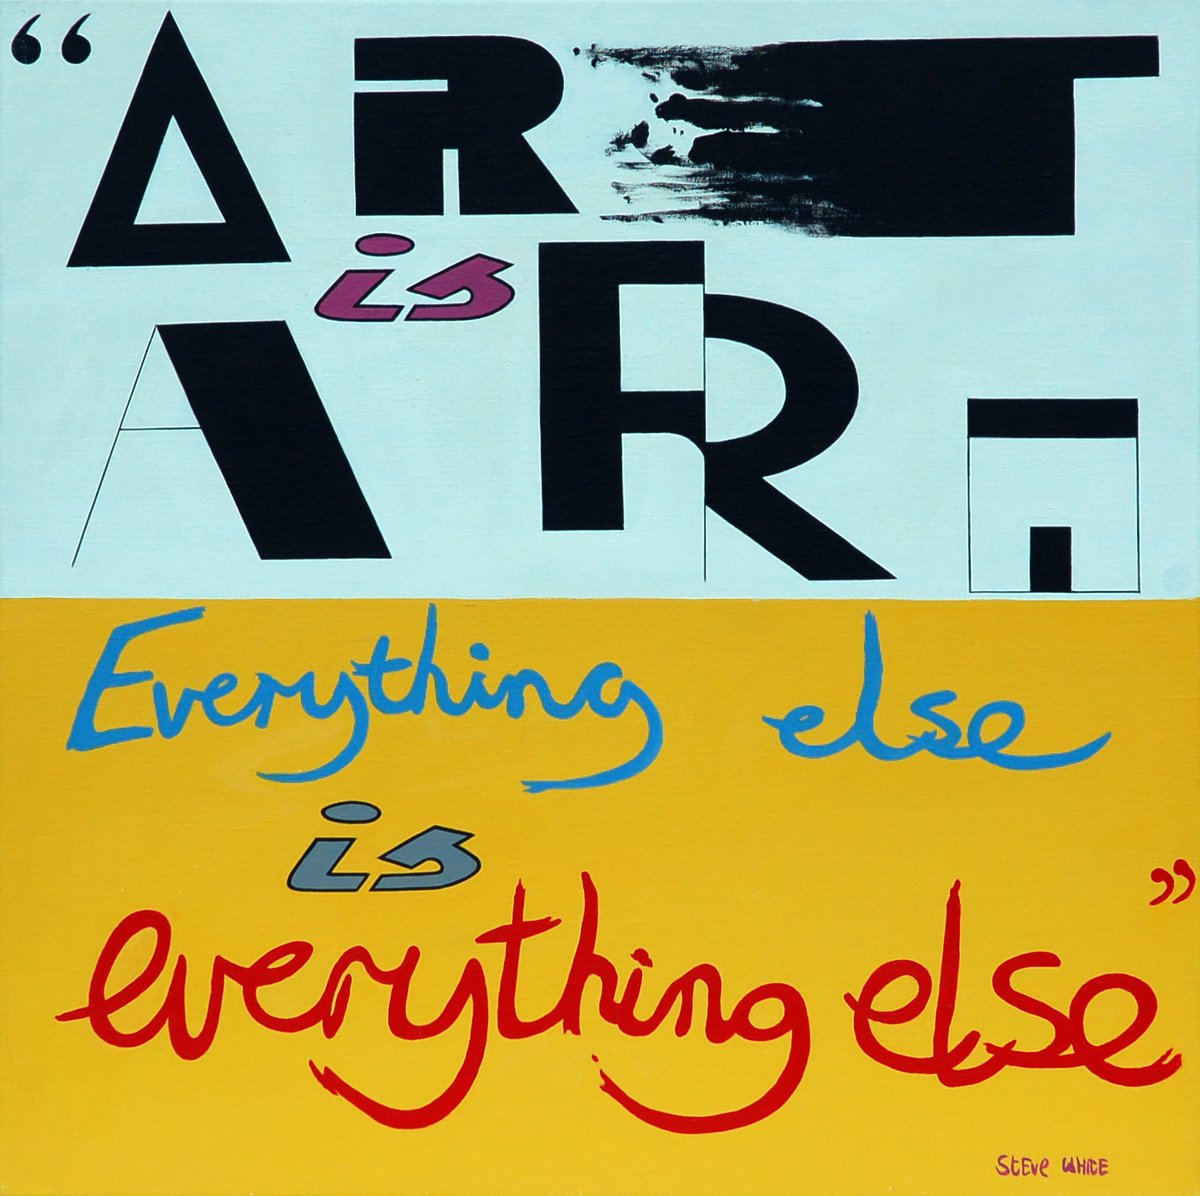 Art is Art. Everything Else is everything else. by Steve White